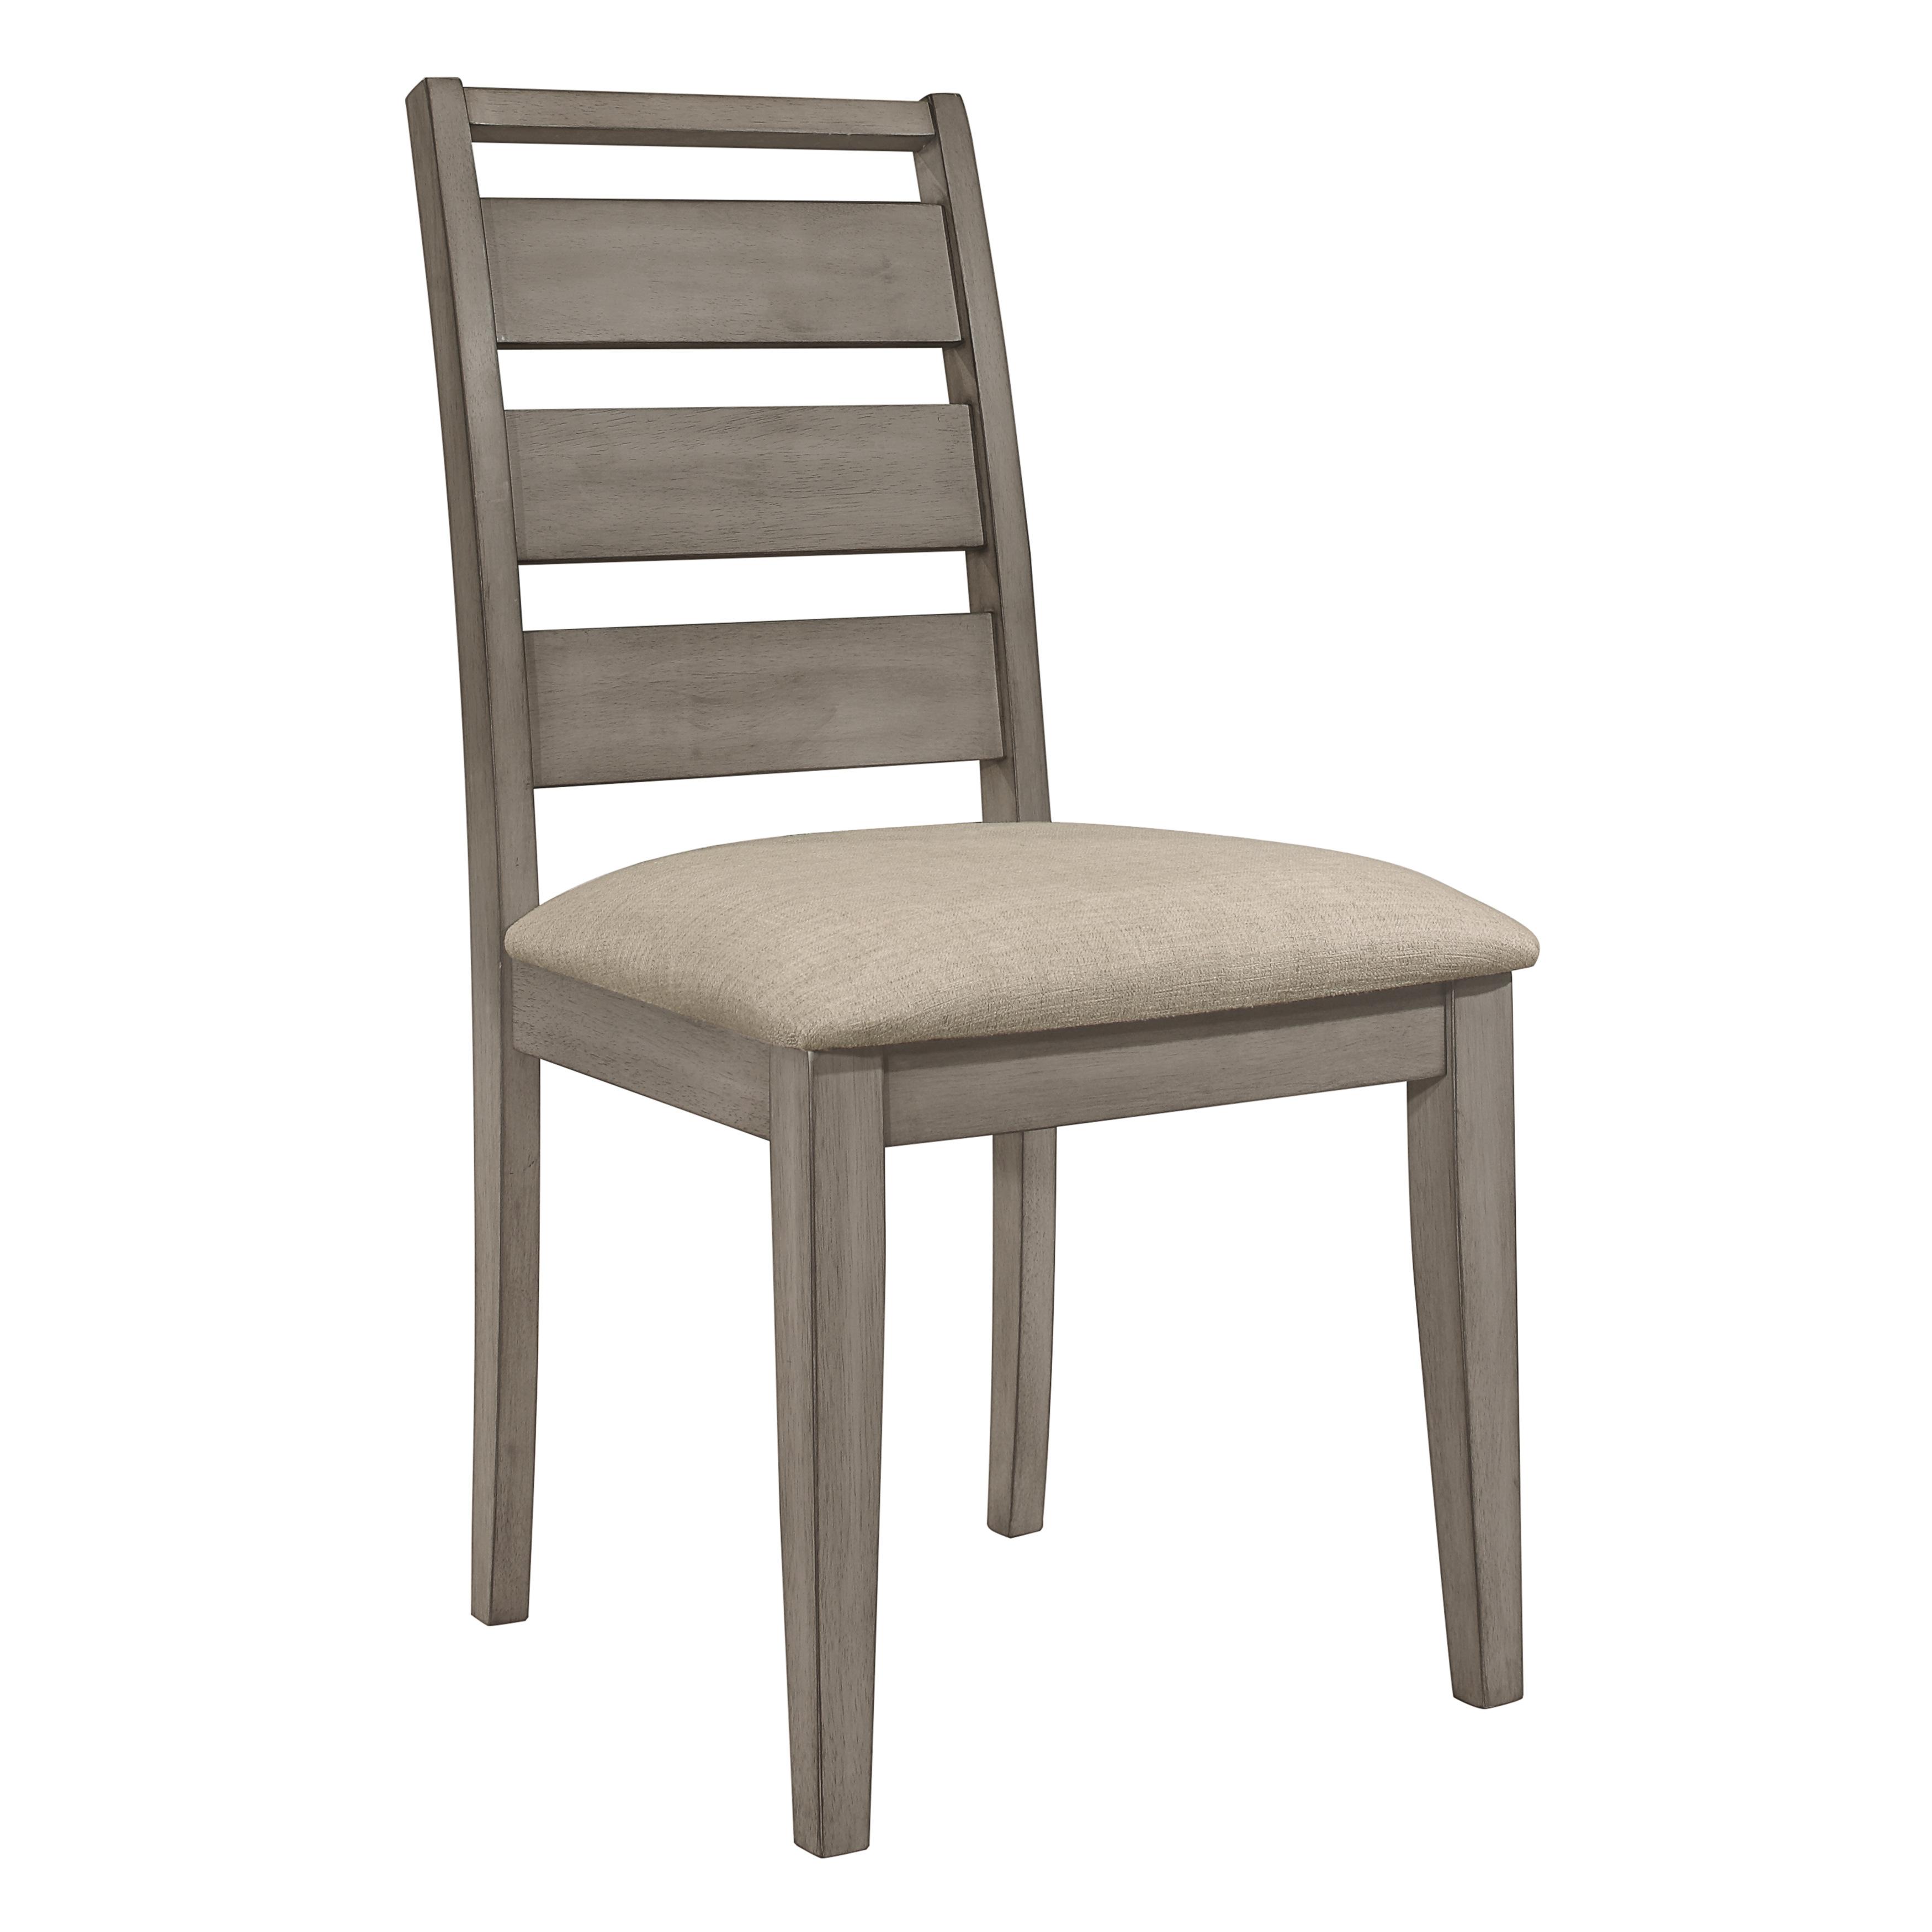 Rustic Side Chair Set 1526S Bainbridge 1526S in Gray Fabric